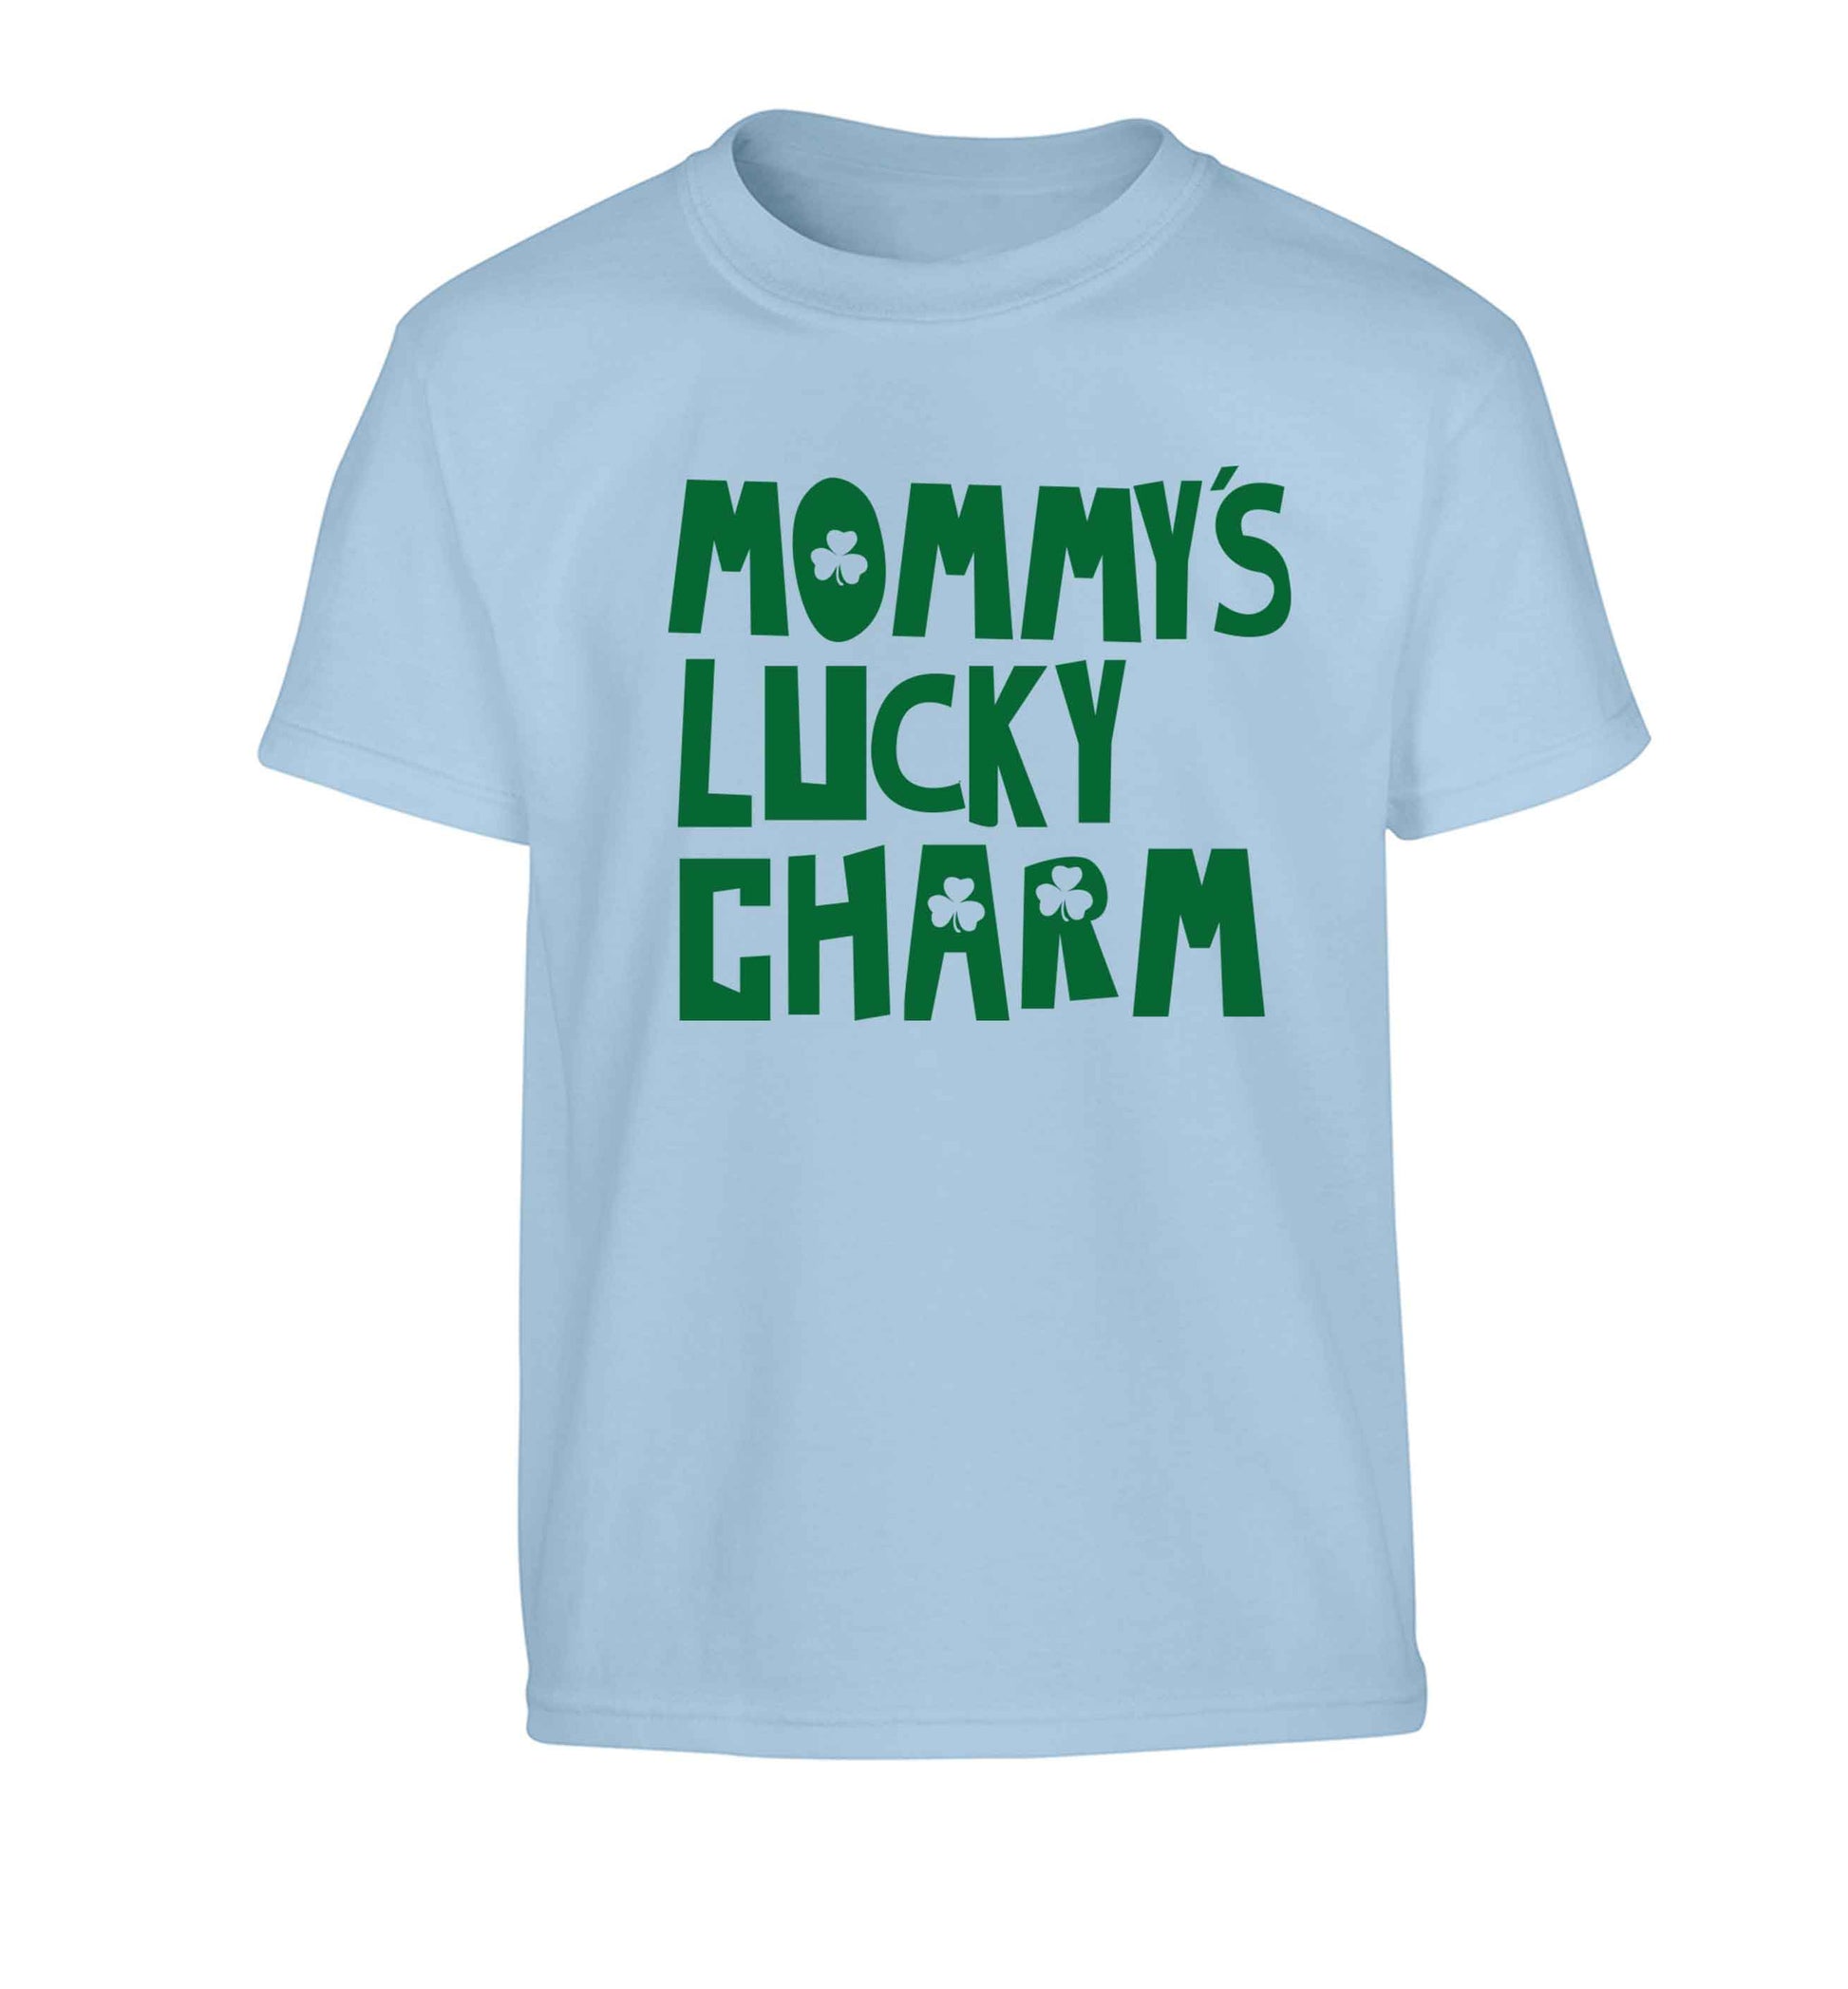 Mommy's lucky charm Children's light blue Tshirt 12-13 Years